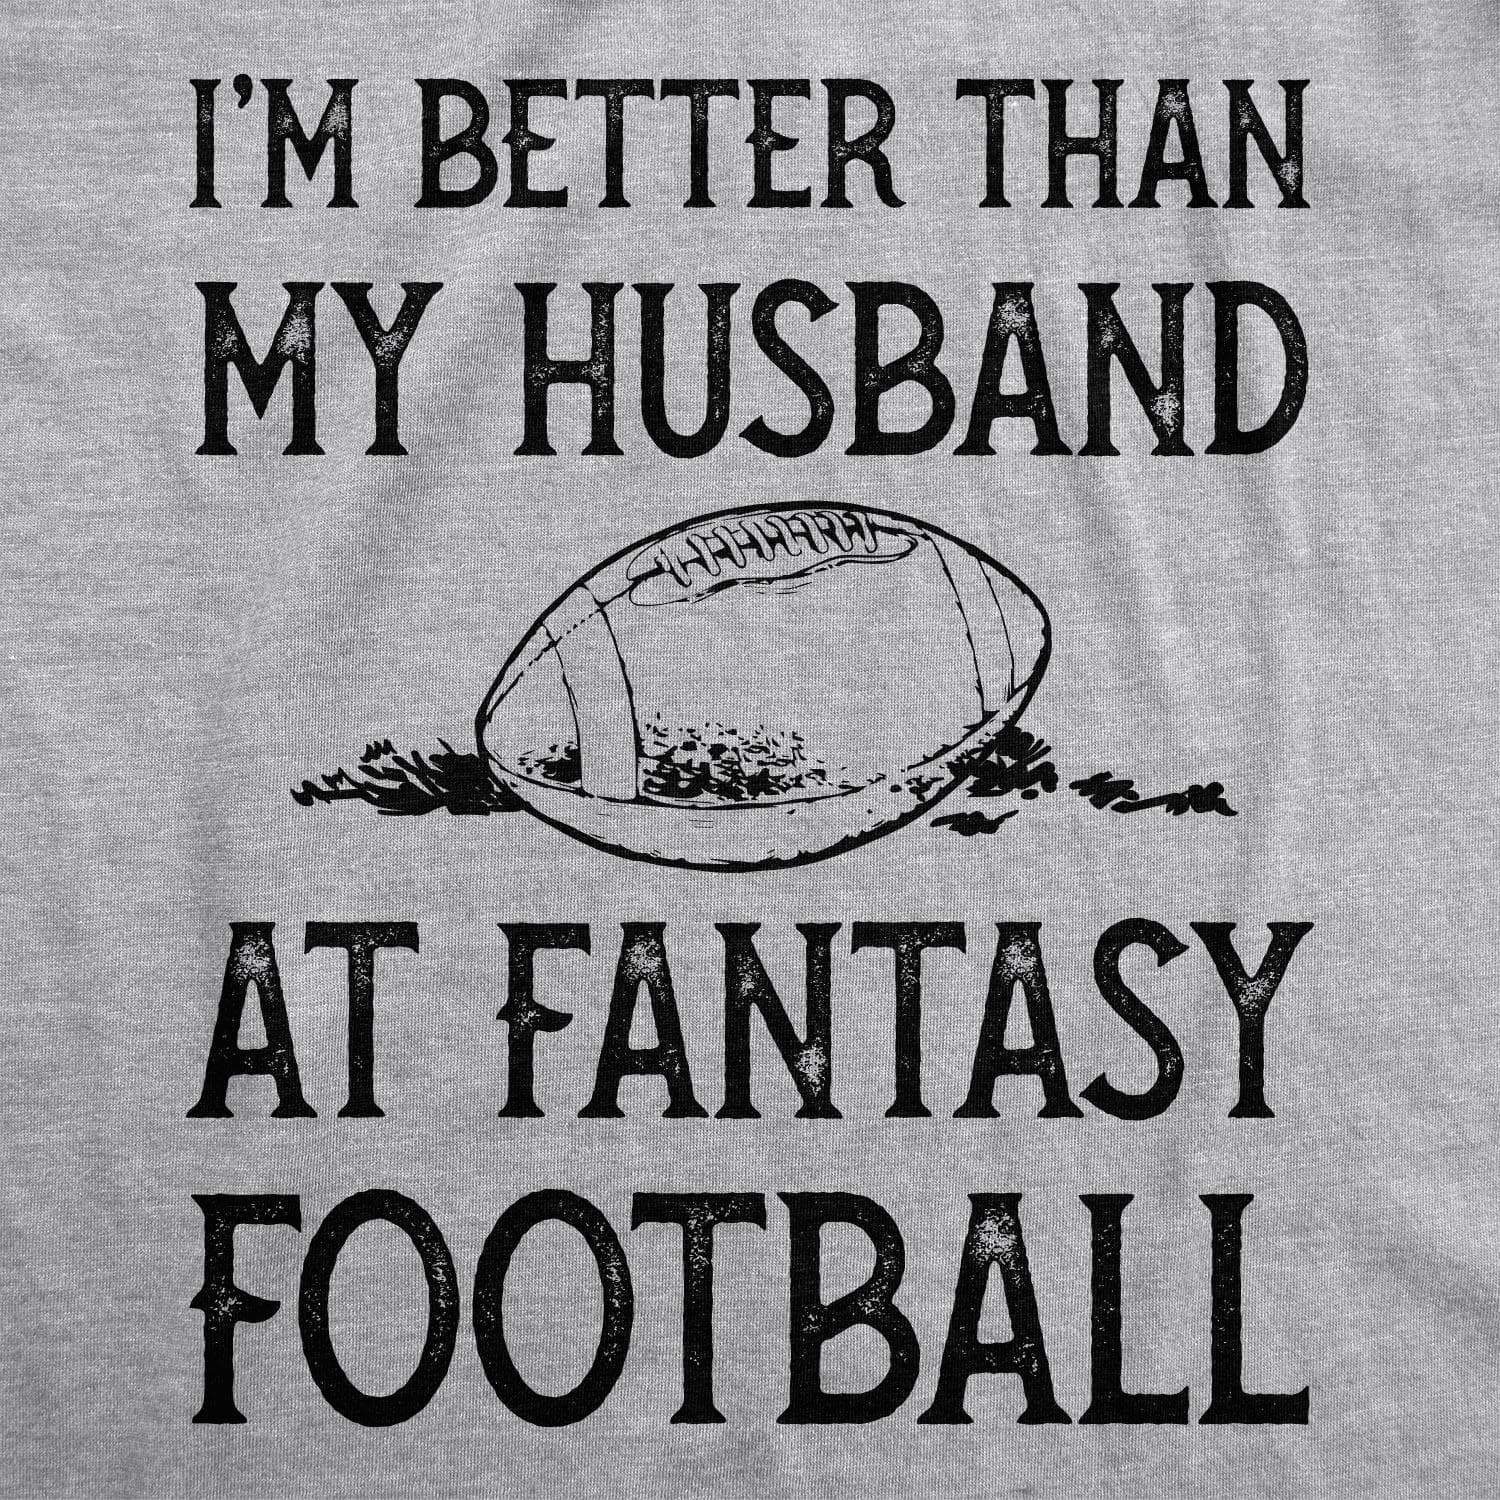 I'm Better Than My Husband At Fantasy Football Women's Tshirt - Crazy Dog T-Shirts